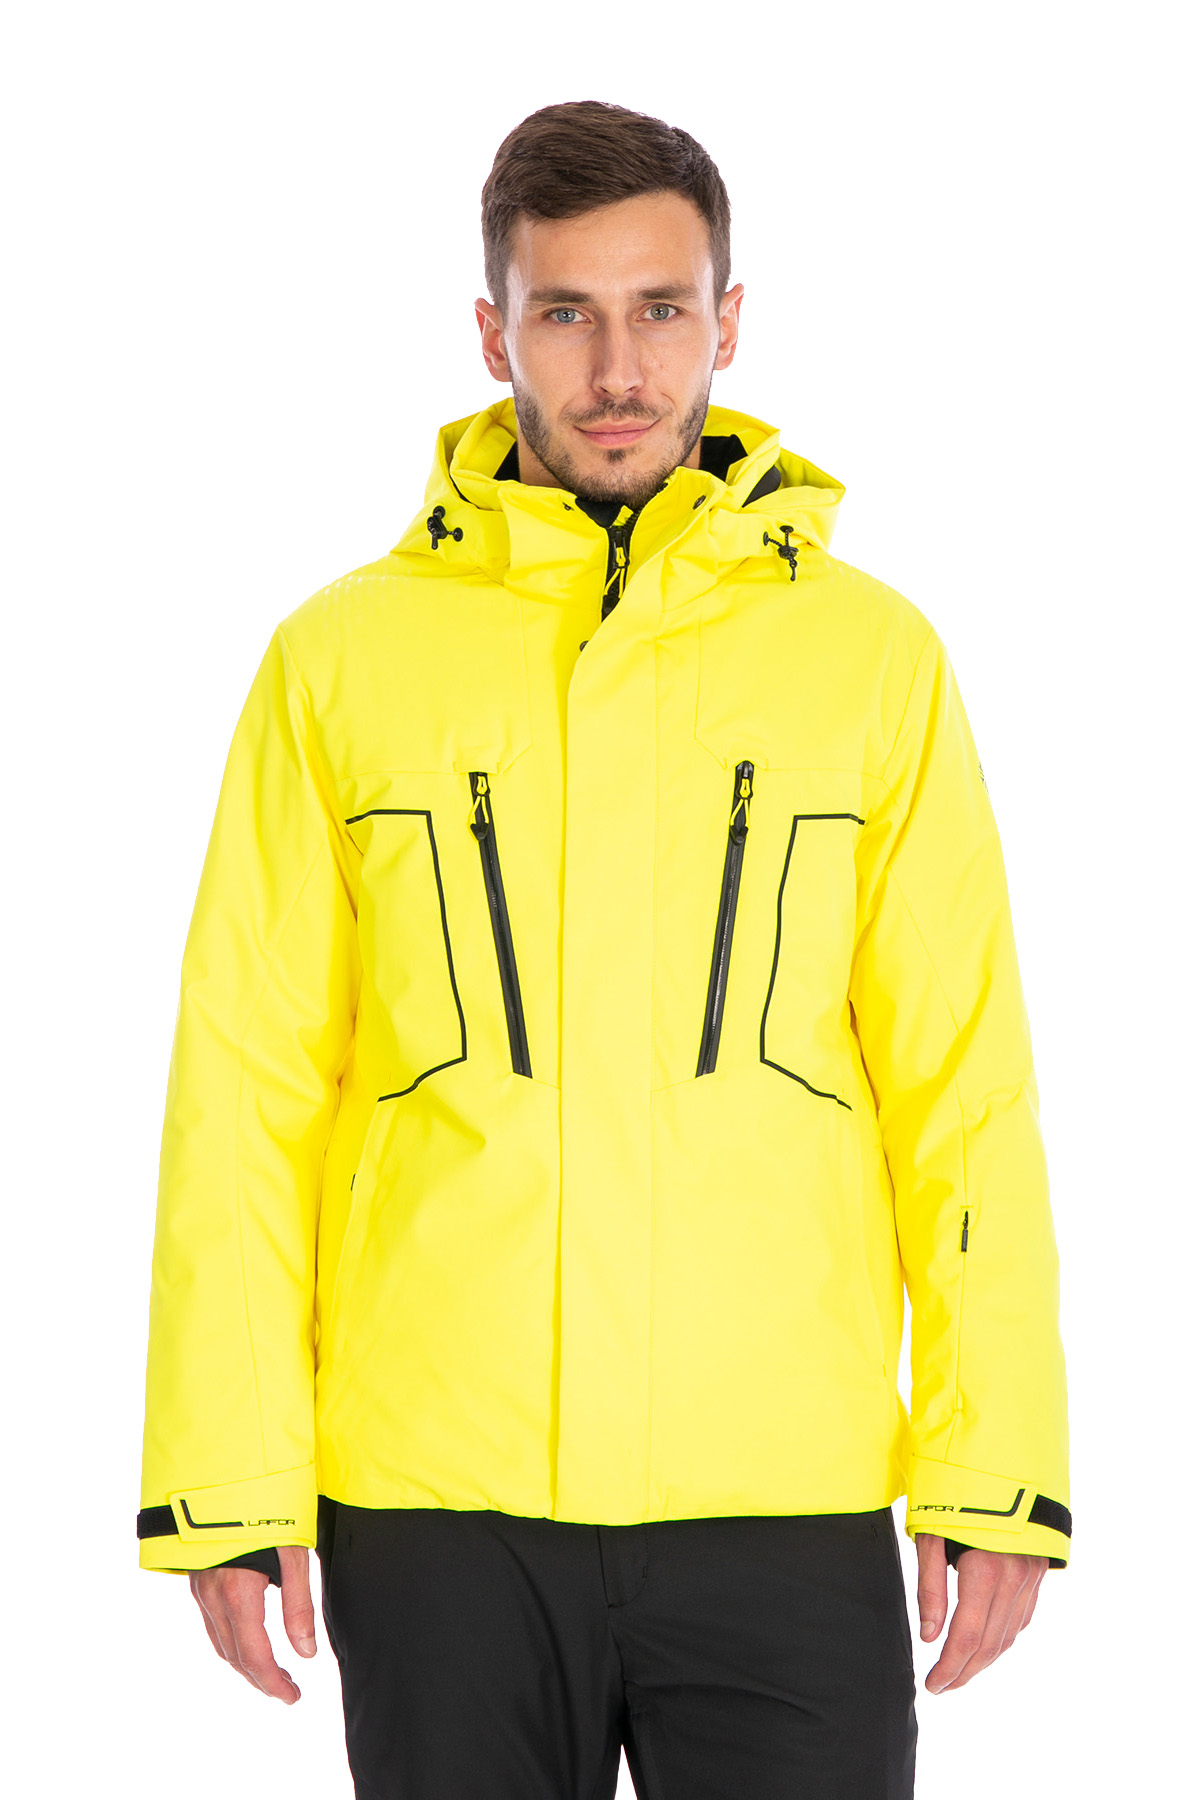 Мужская горнолыжная Куртка Lafor Желтый, 767013 (62, 6xl)